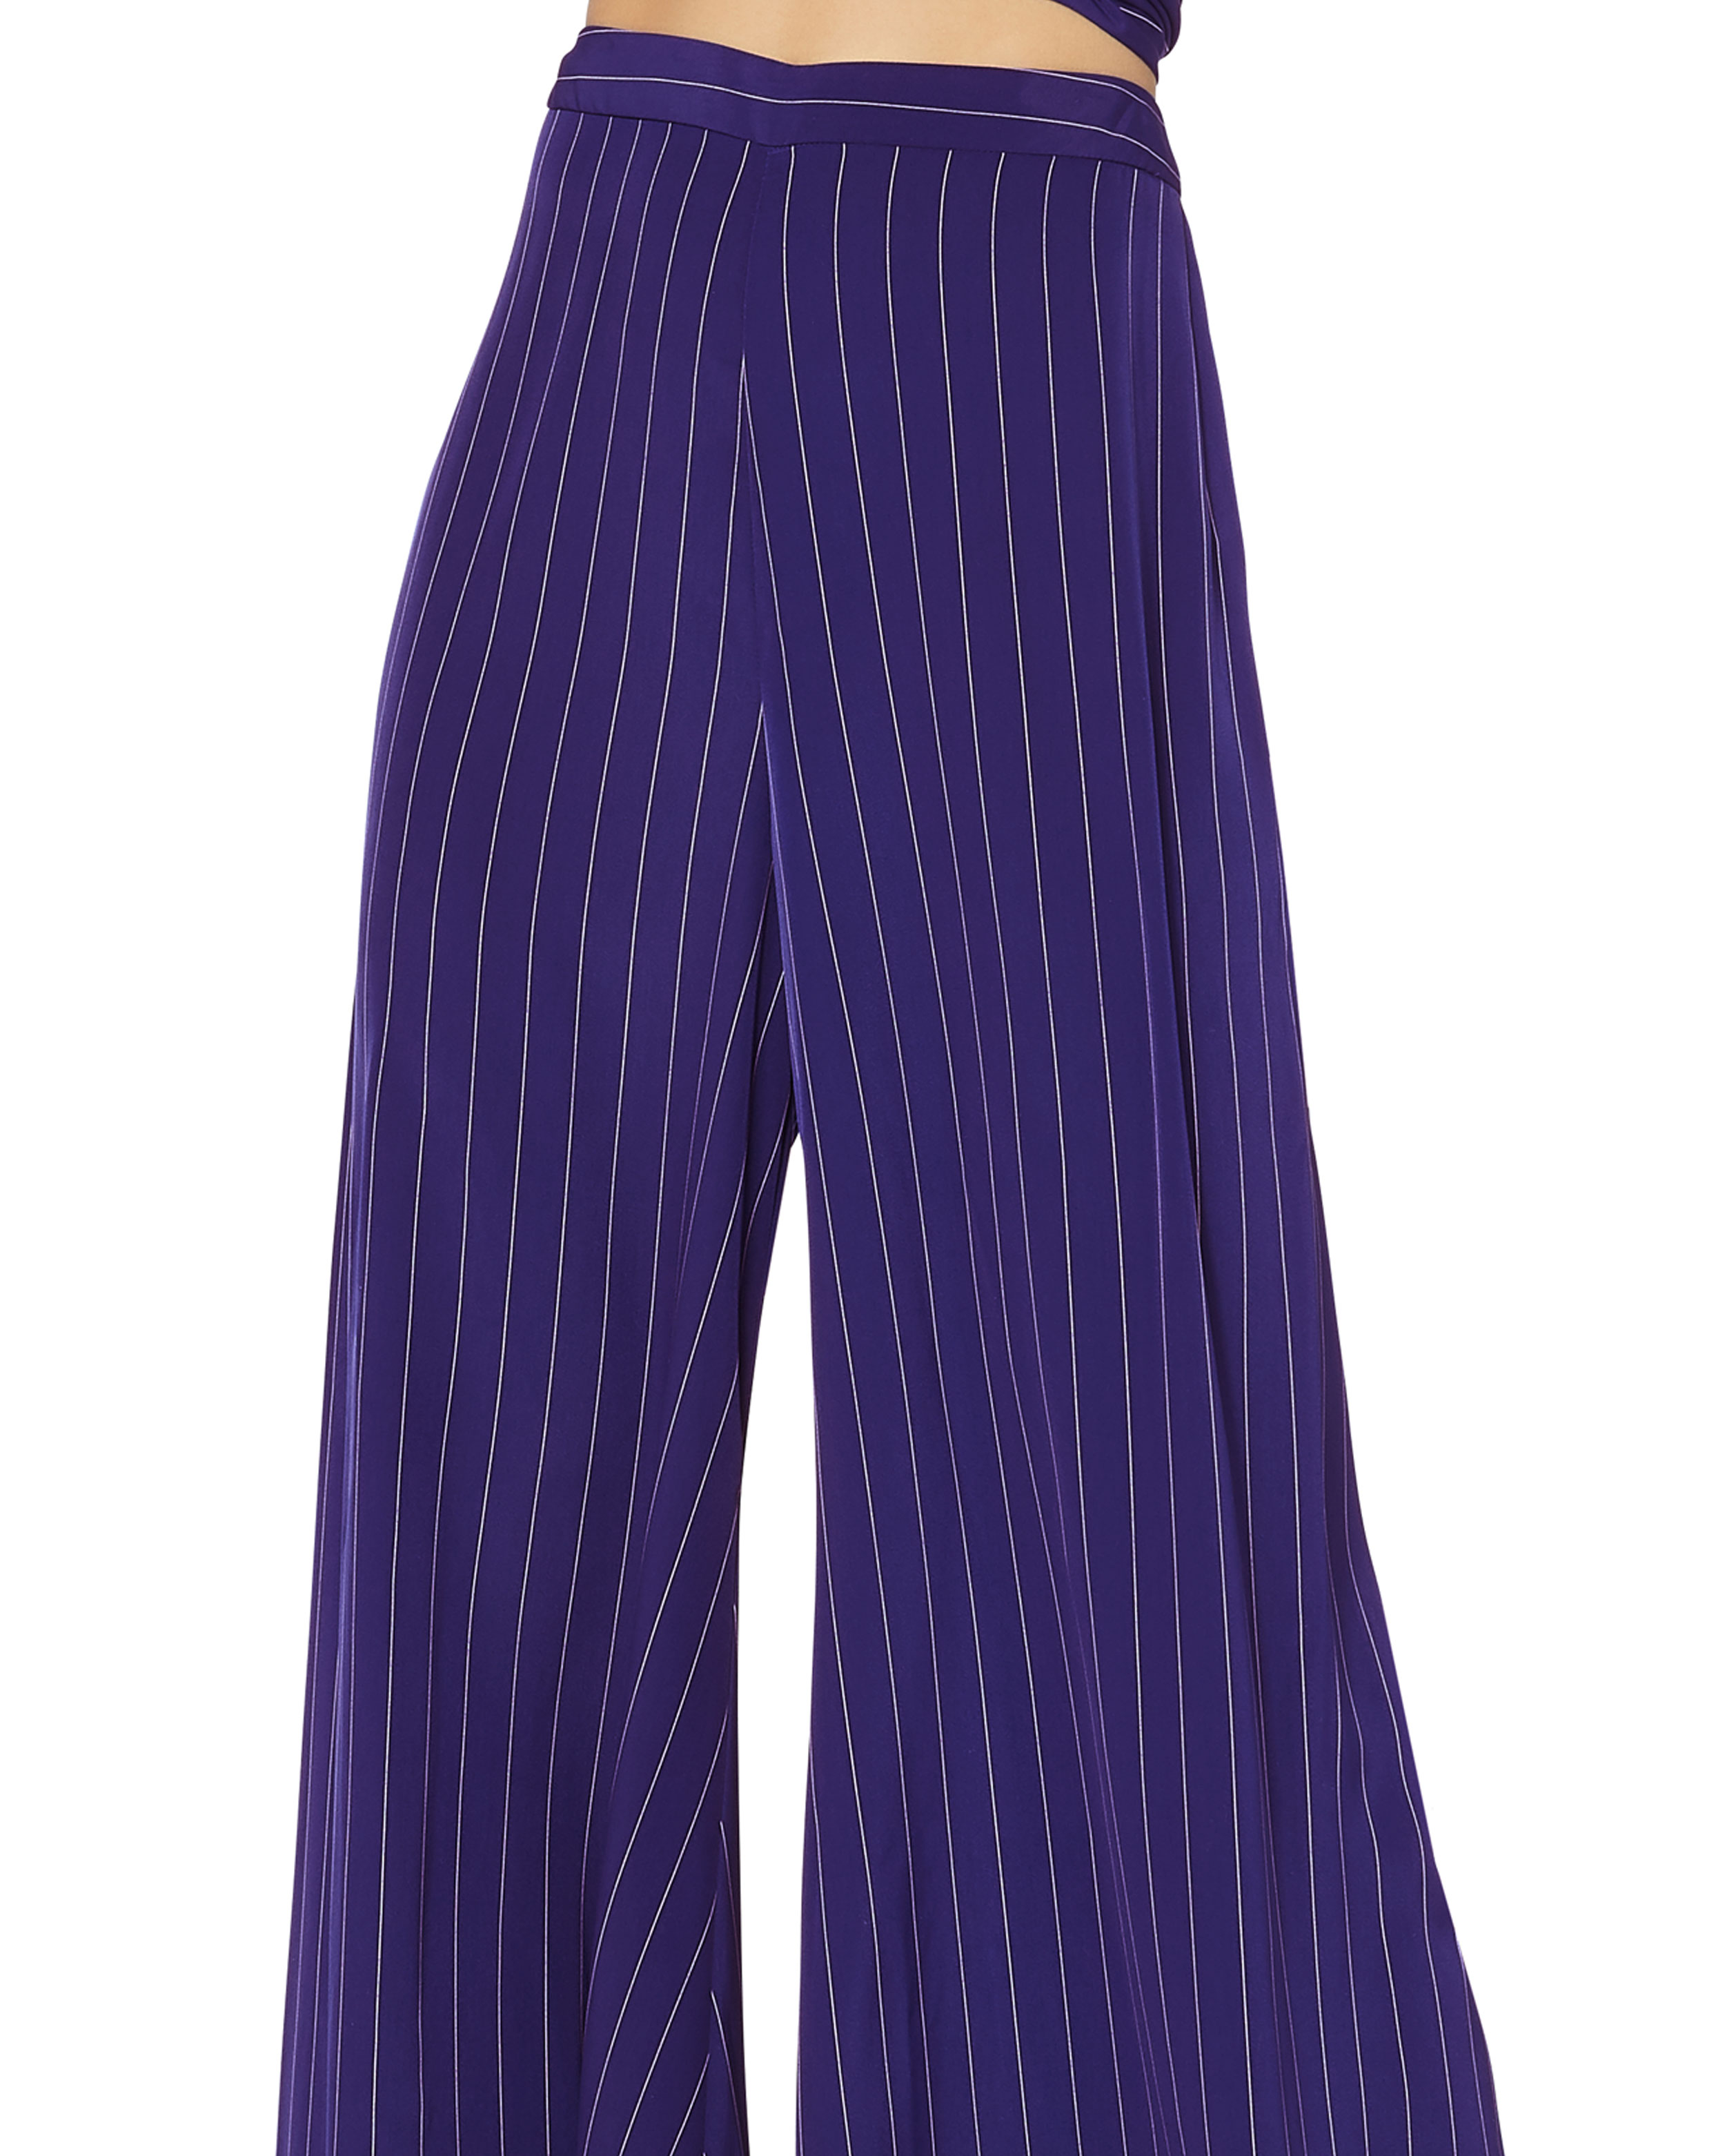 Alexis Beatrix High-Waisted Blue Stripe Pants in blue | INTERMIX®